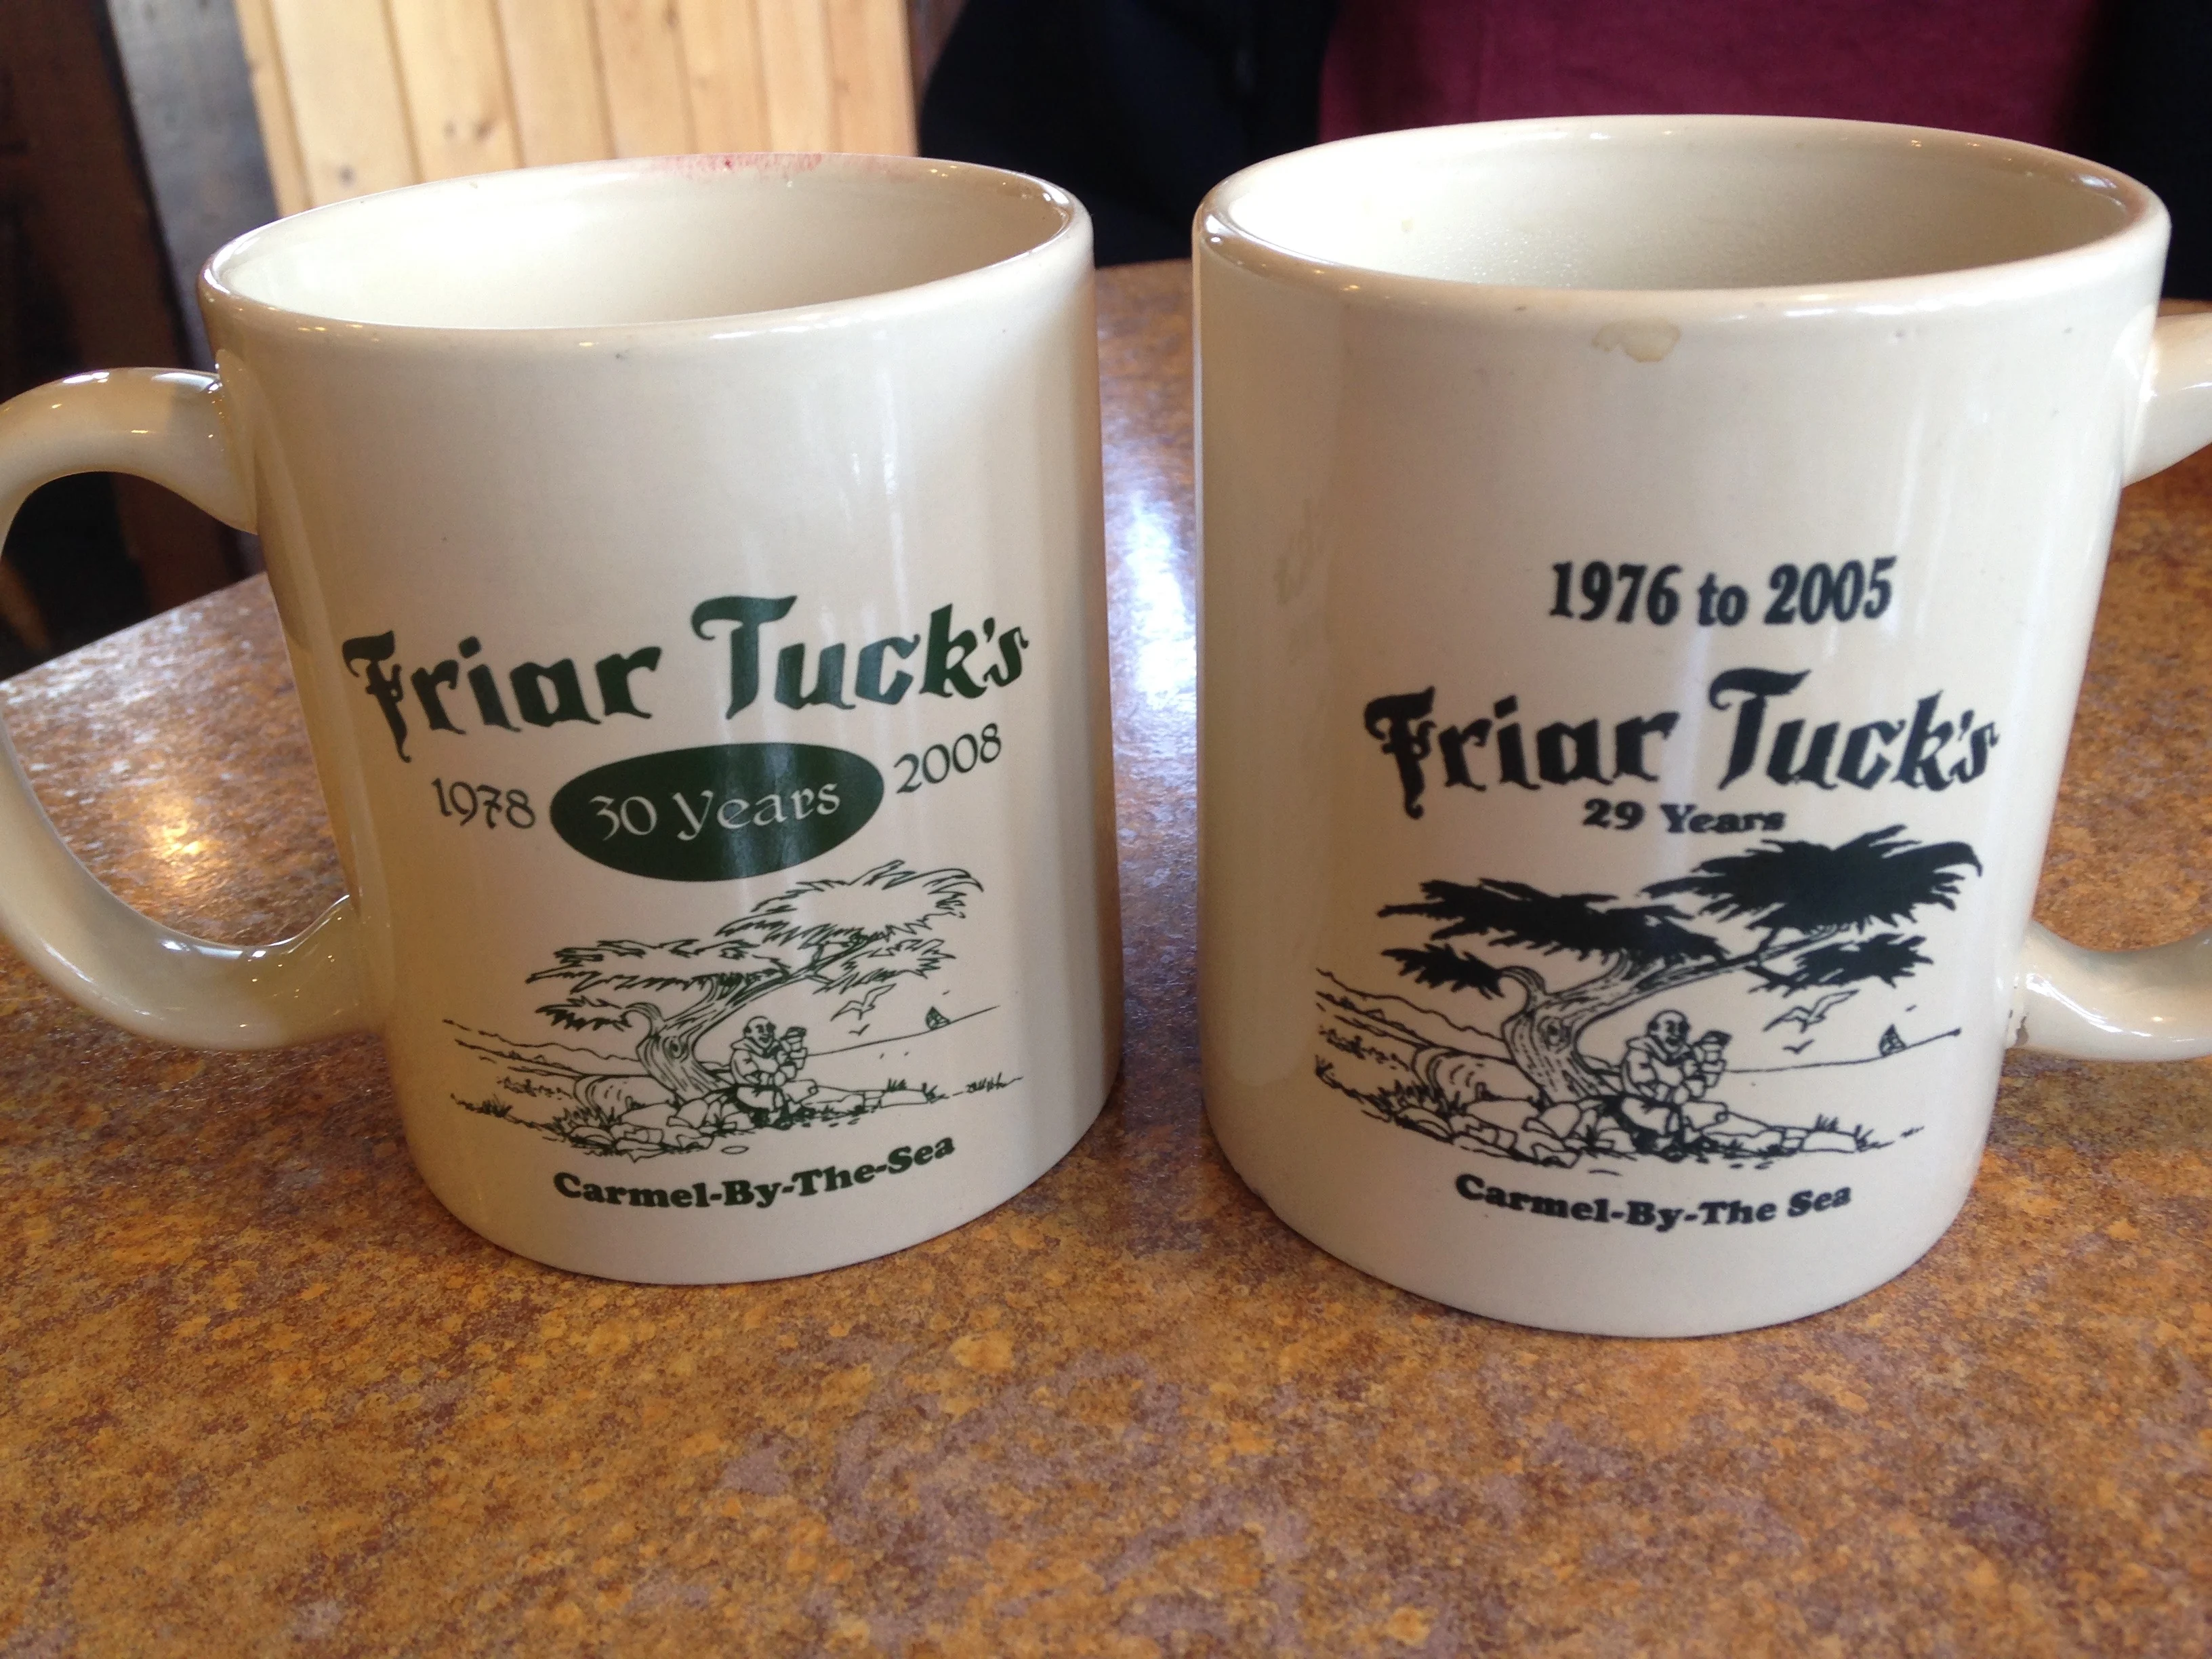 Friar Tucks restaurant in Carmel